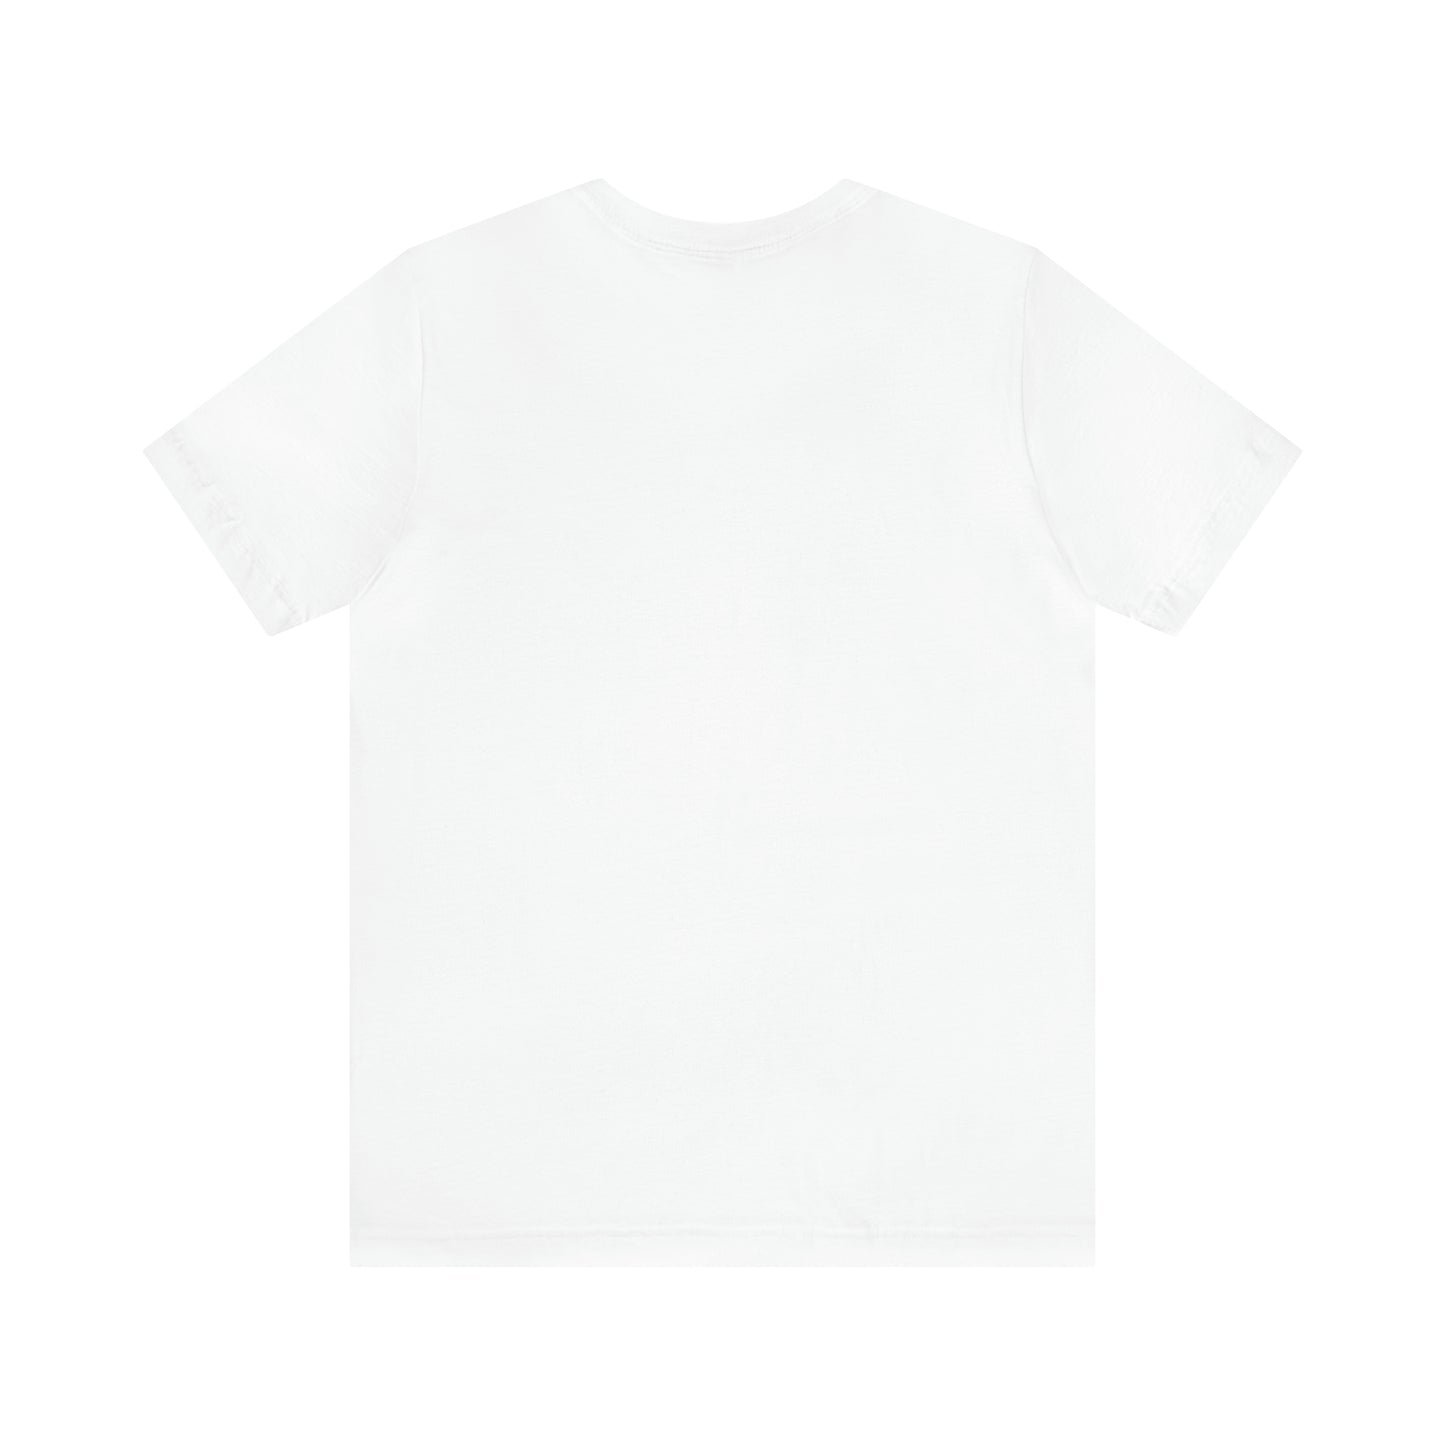 ULY JUZ Unisex T-Shirt